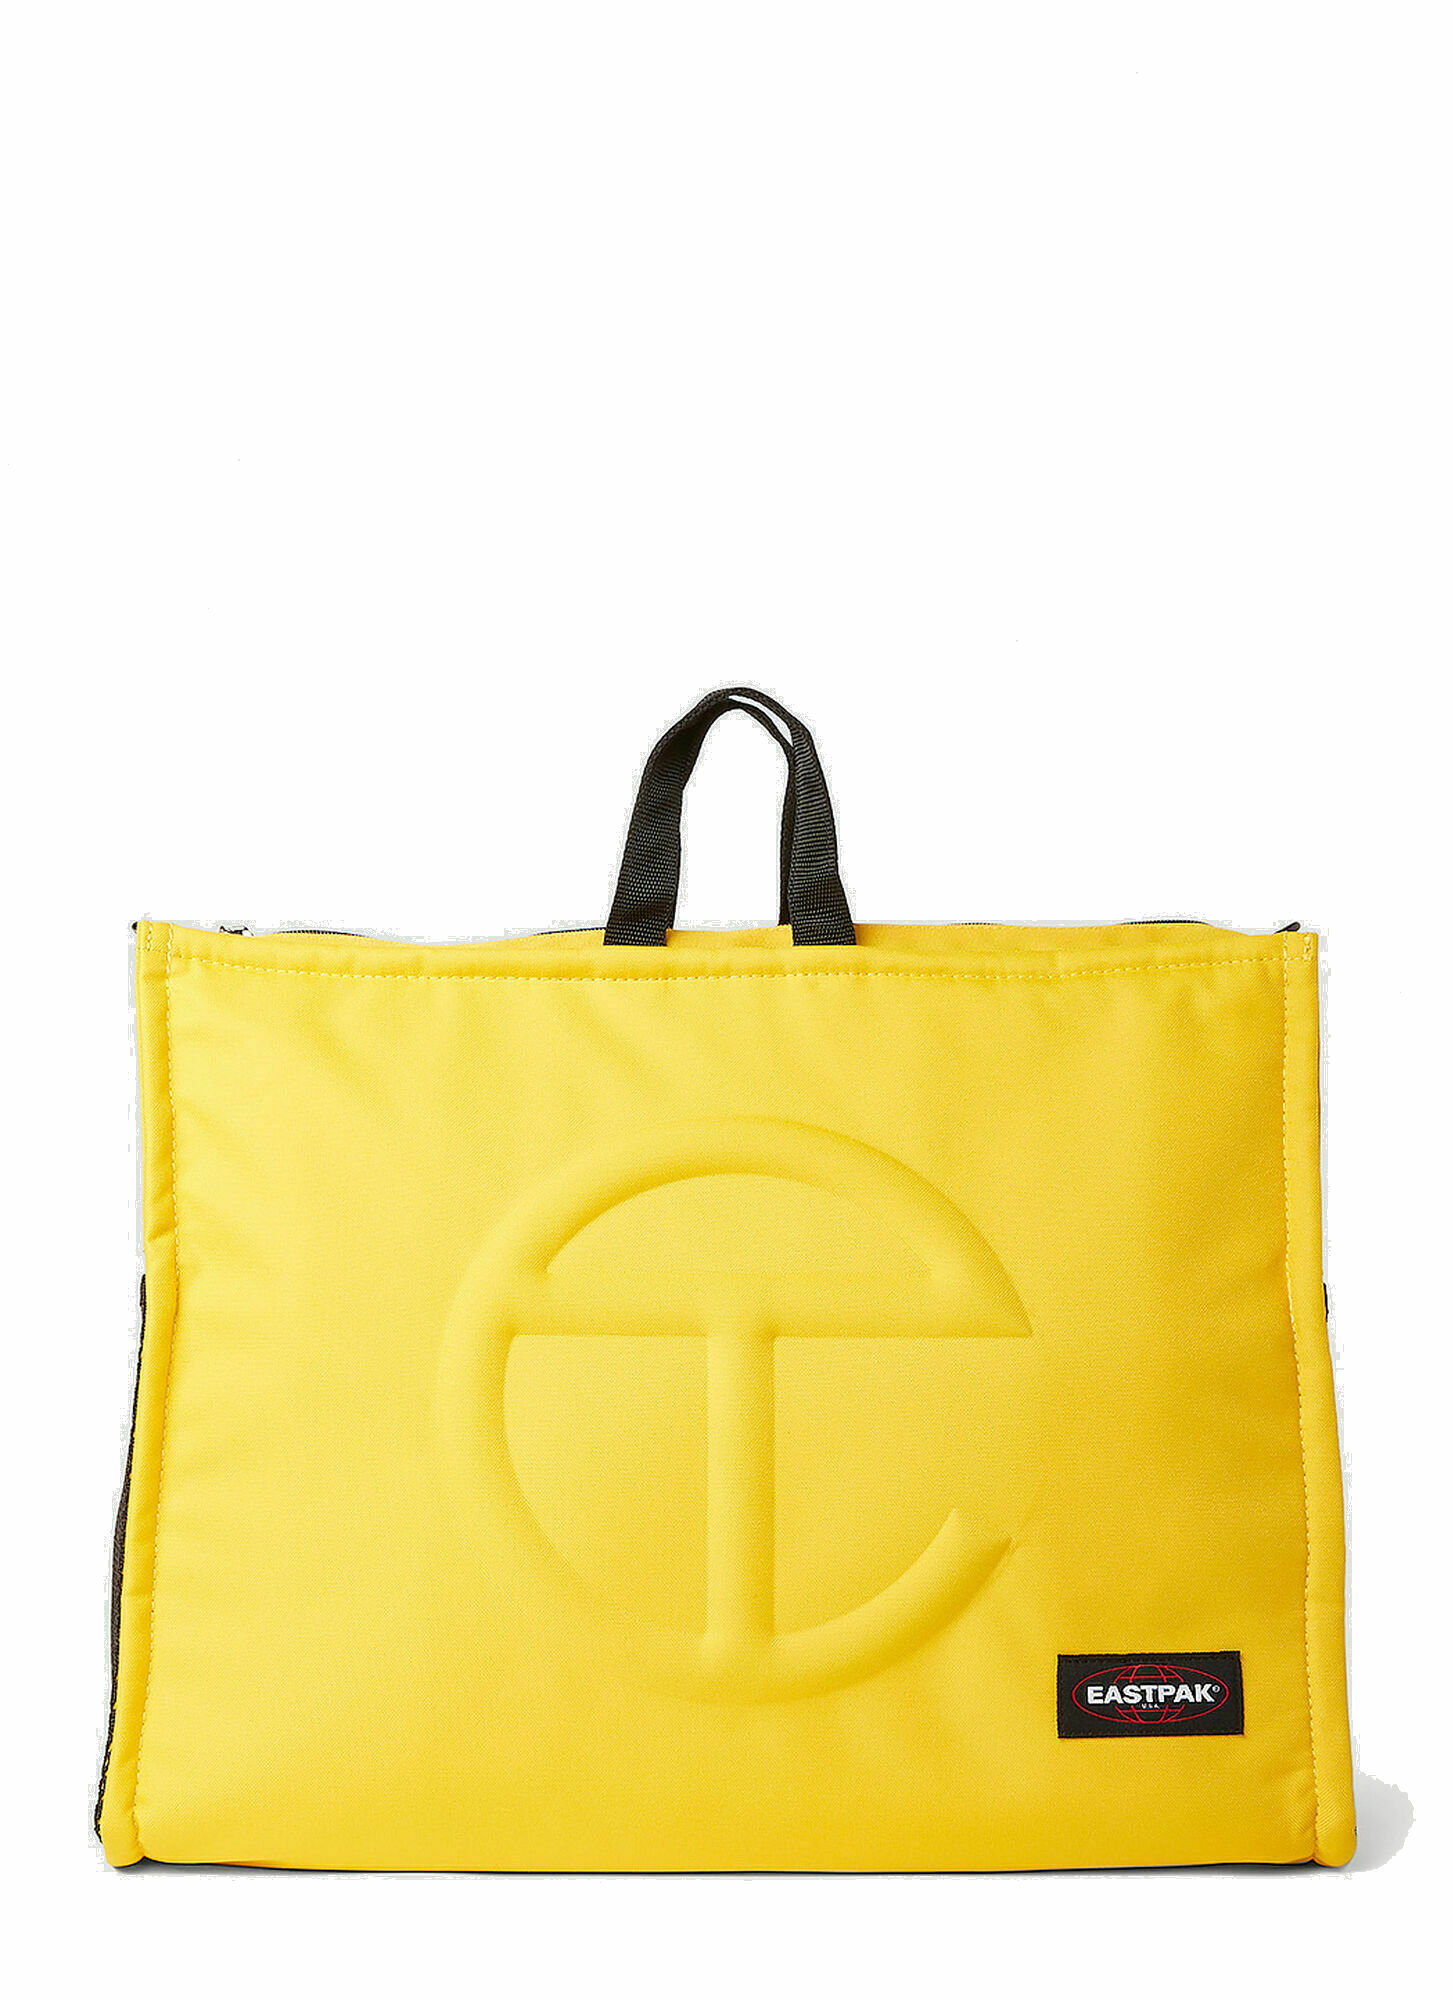 Eastpak x Telfar - Shopper Convertible Large Tote Bag in Yellow